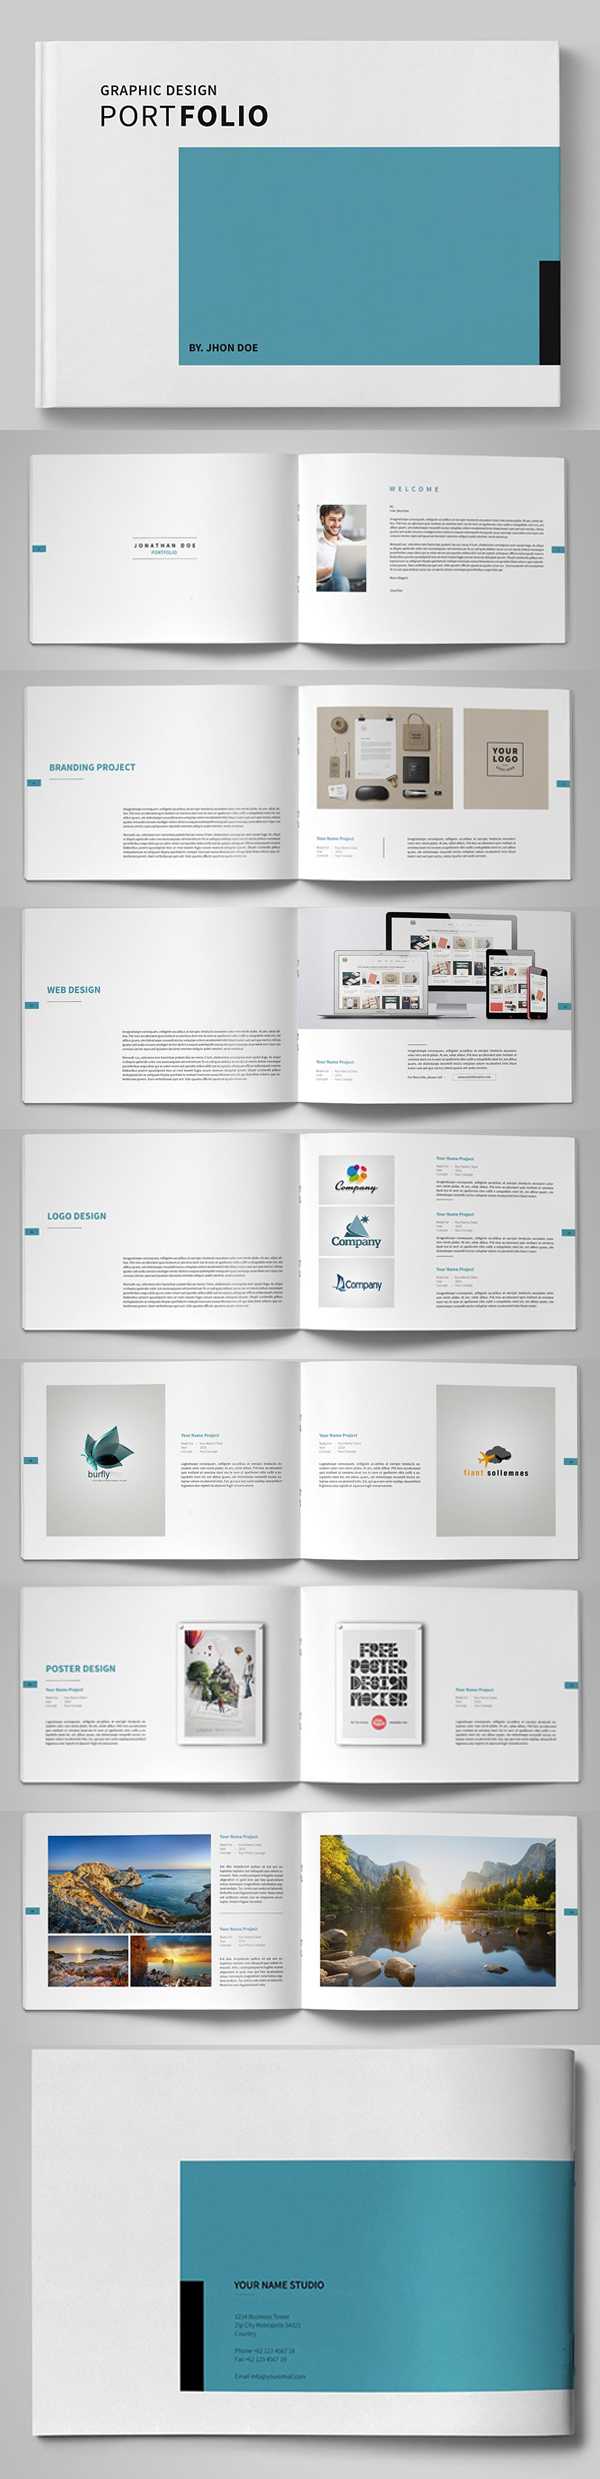 20 New Professional Catalog Brochure Templates | Design With Brochure Template Indesign Free Download